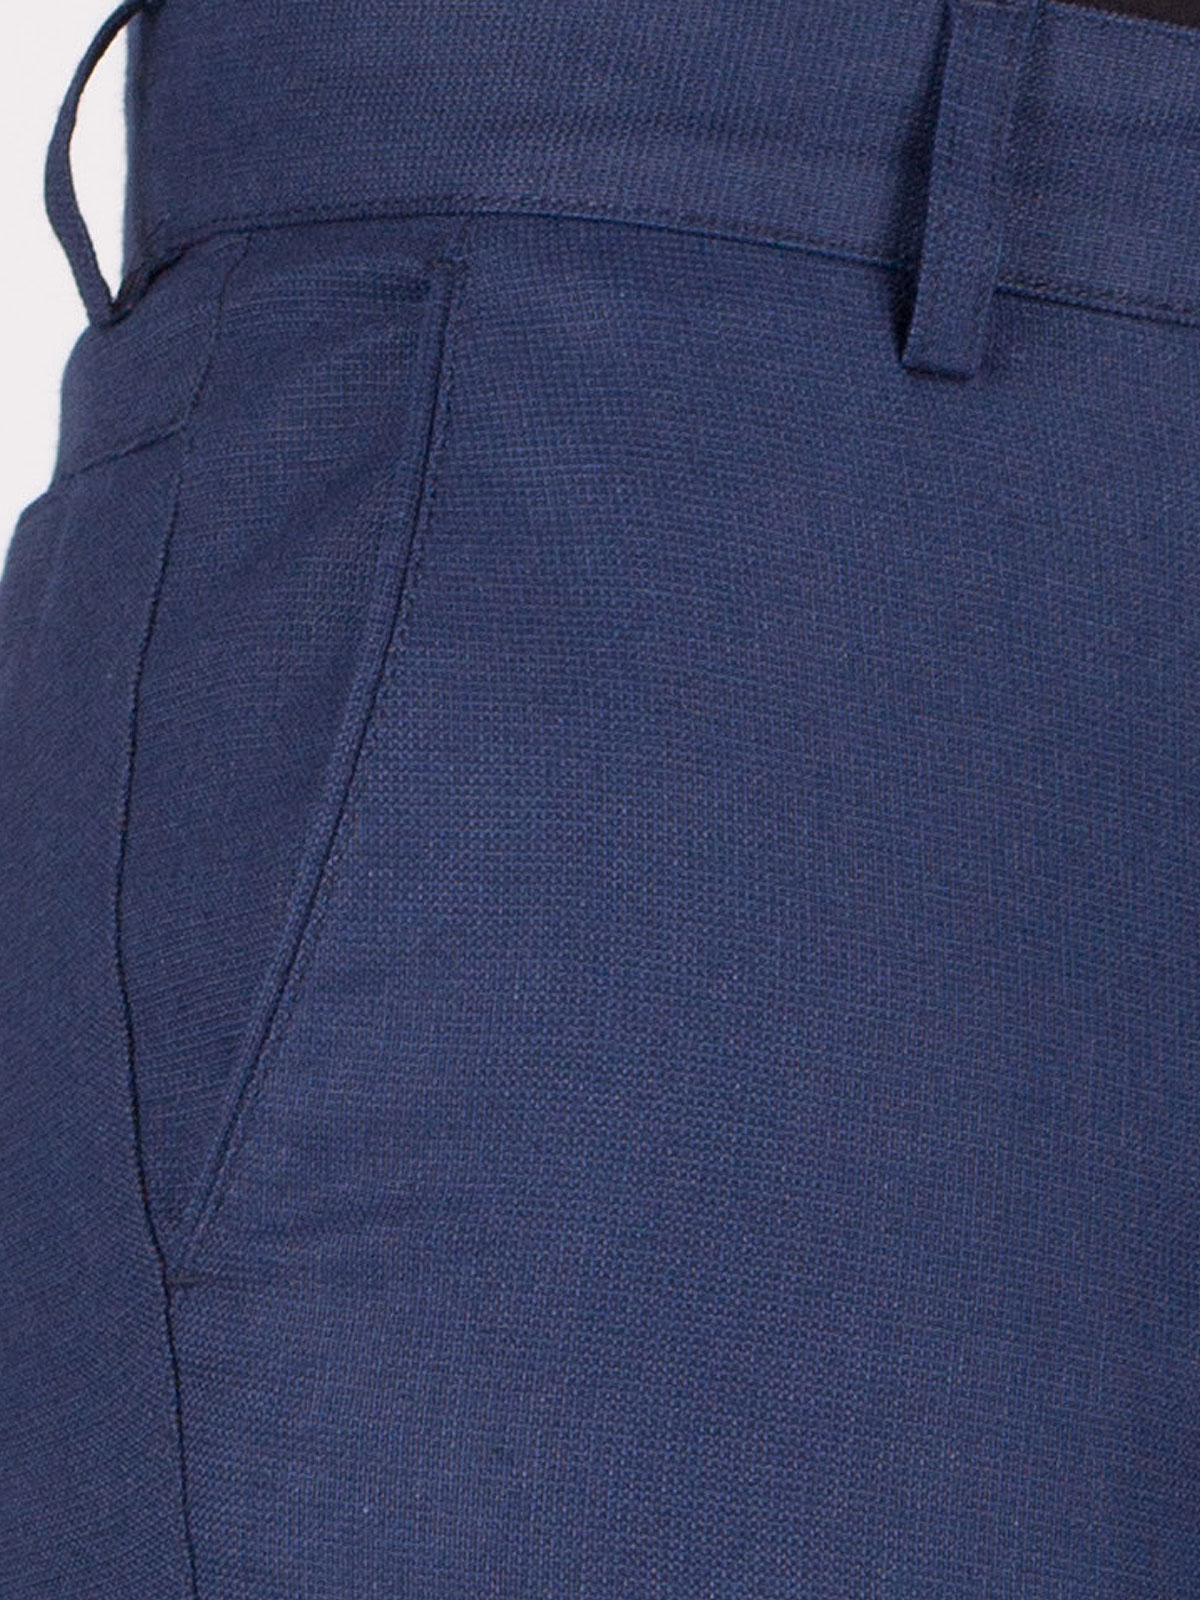 Pants in dark blue grain fabric - 60255 € 21.93 img3